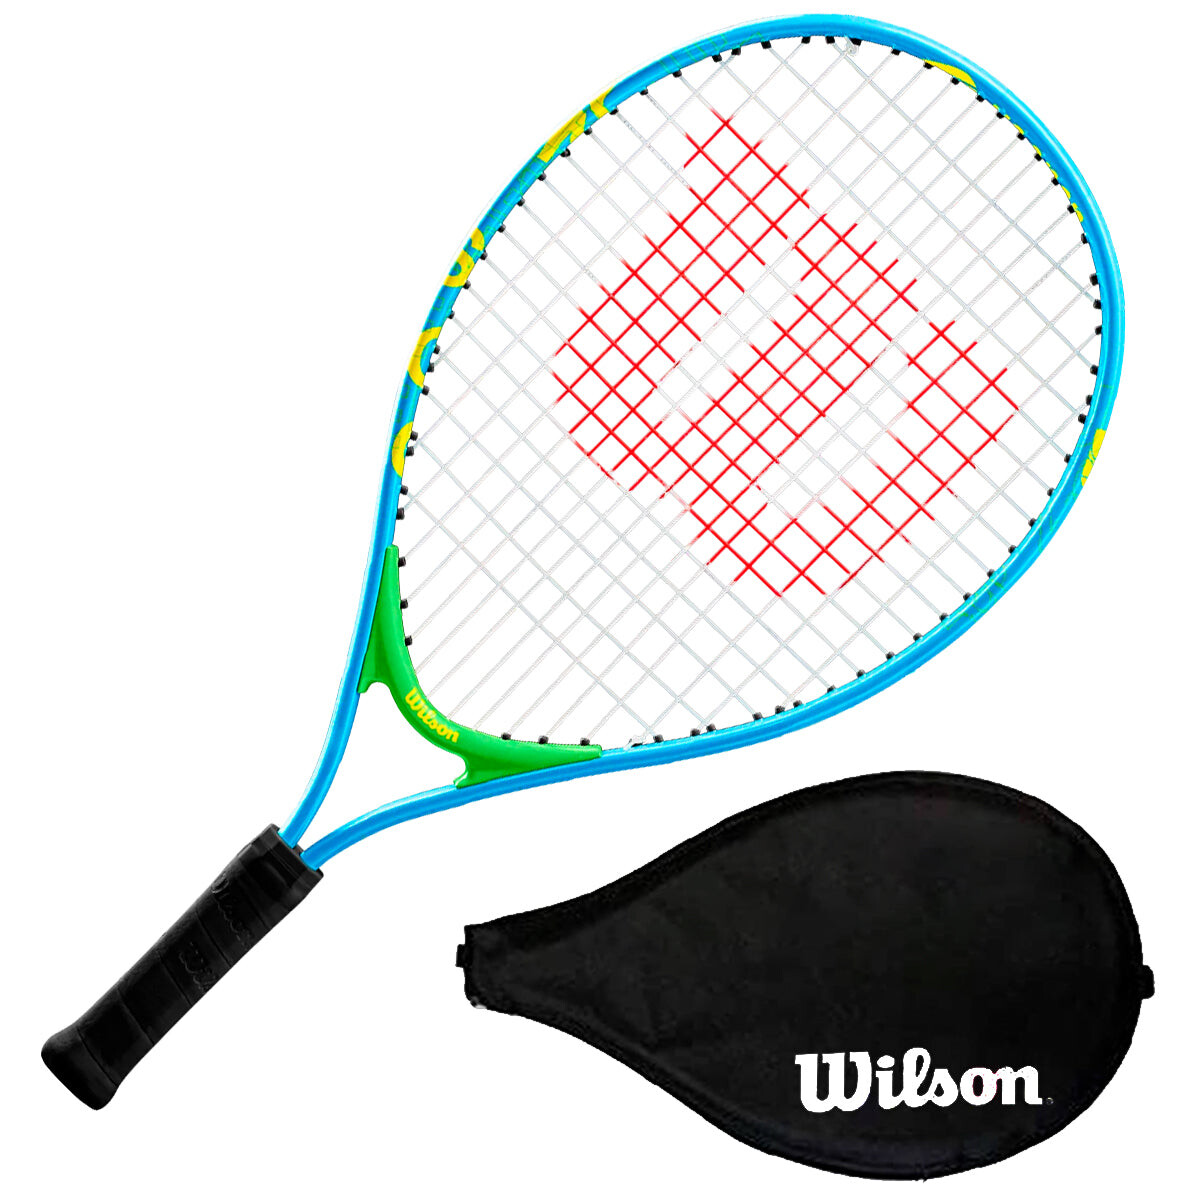 Raqueta Wilson Us Open 21 P/ Niño Profesional Tennis 